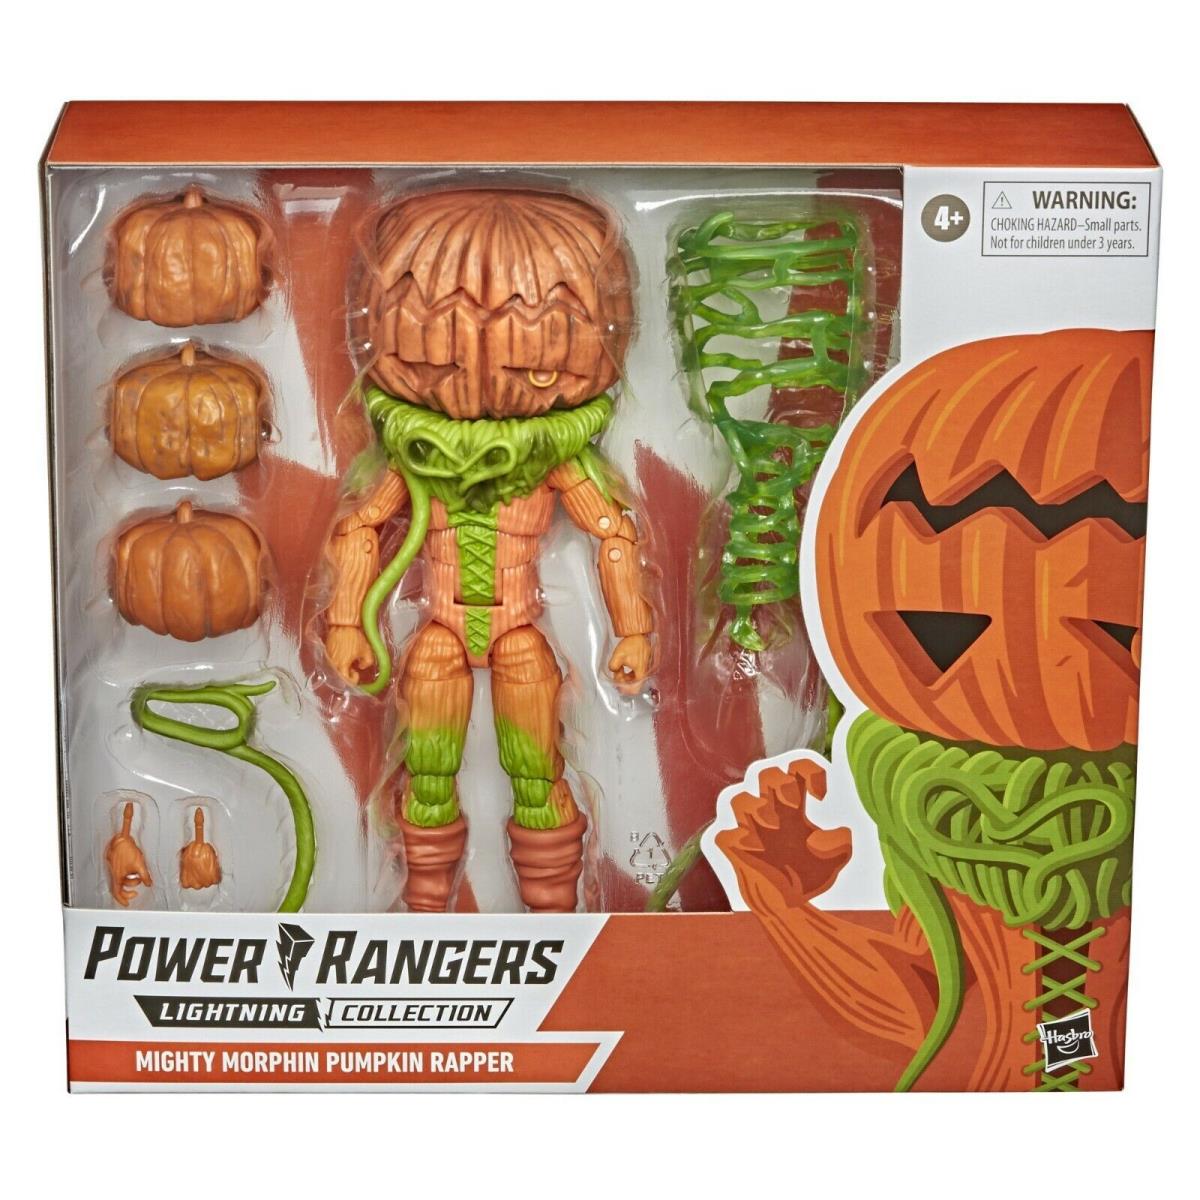 Hasbro Mighty Morphin Power Rangers Lightning Collection Pumpkin Rapper Figure